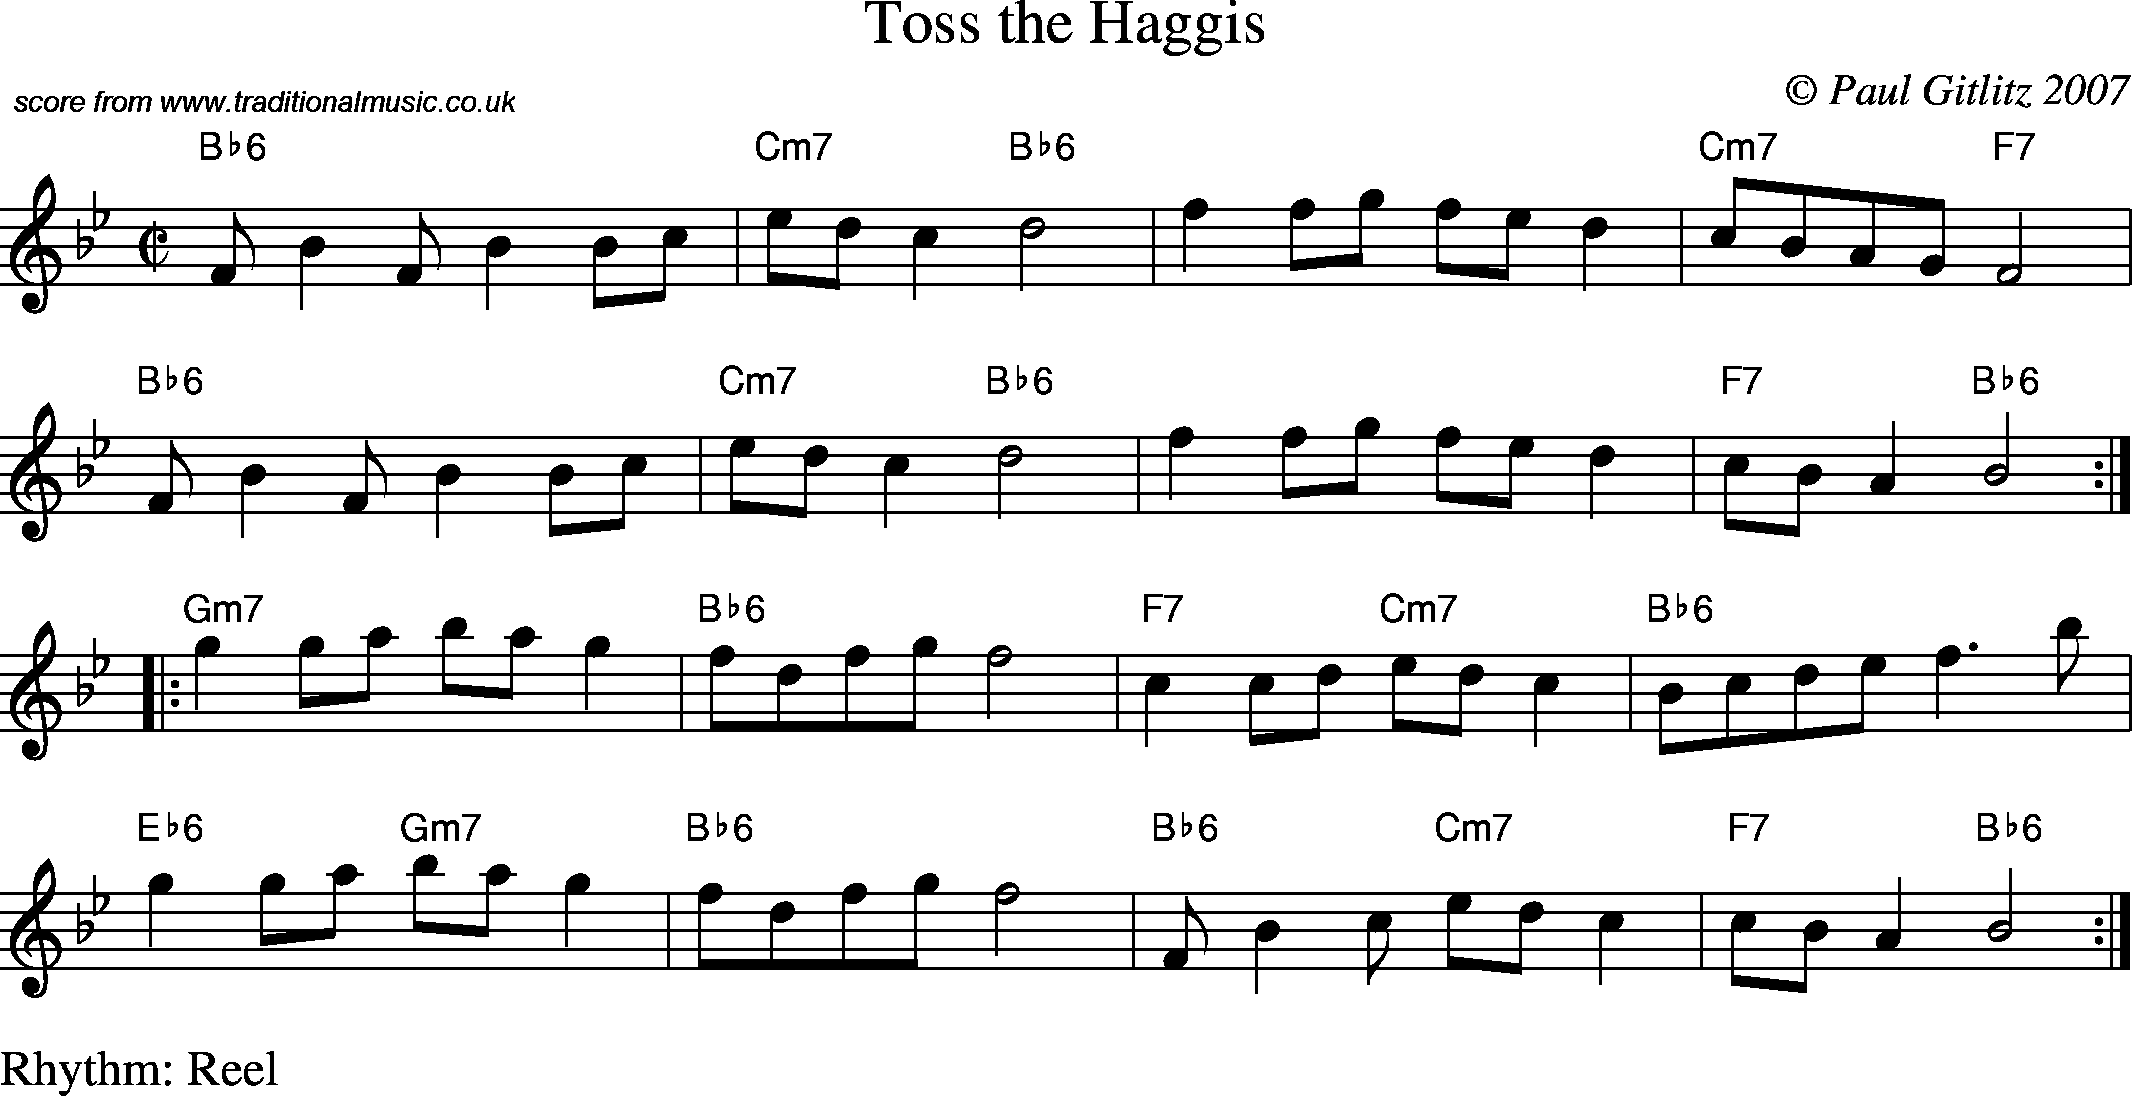 Sheet Music Score for Reel - Toss the Haggis